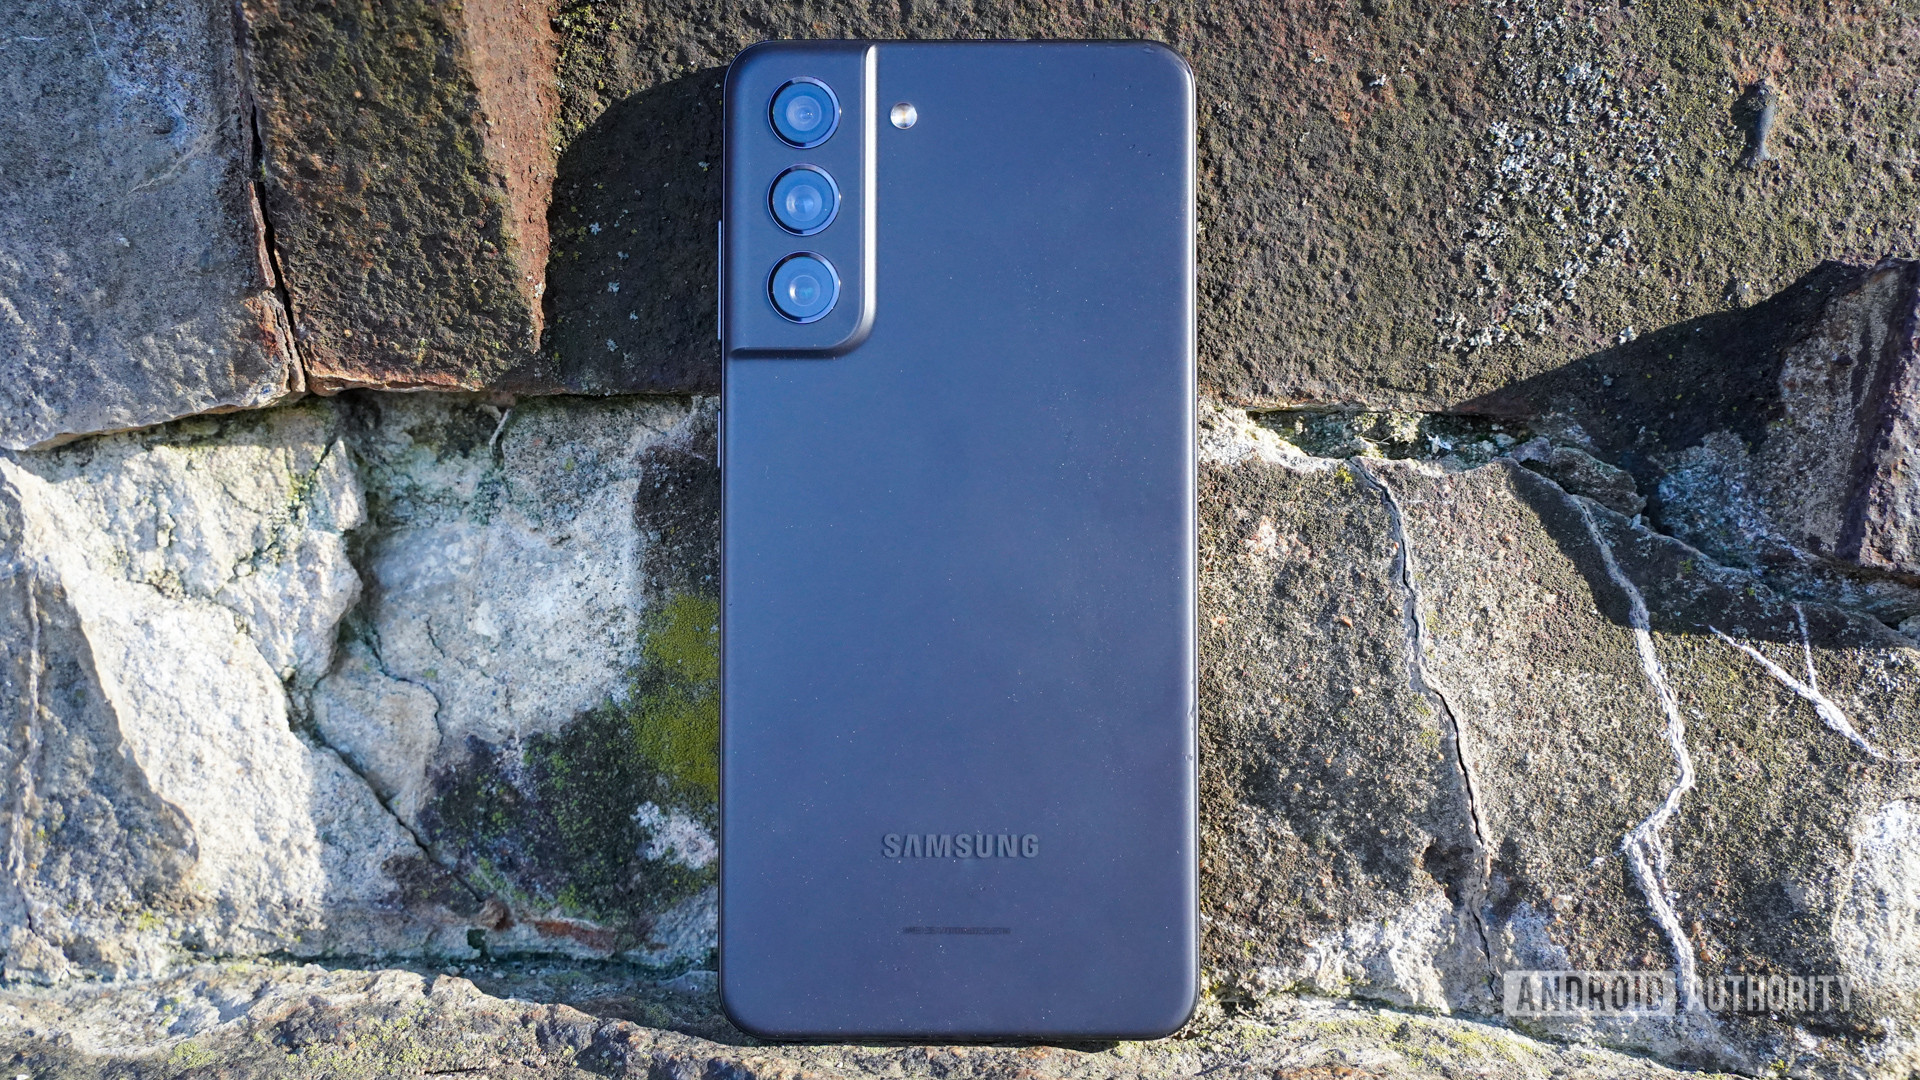 Samsung Galaxy S21 FE rear panel showing camera